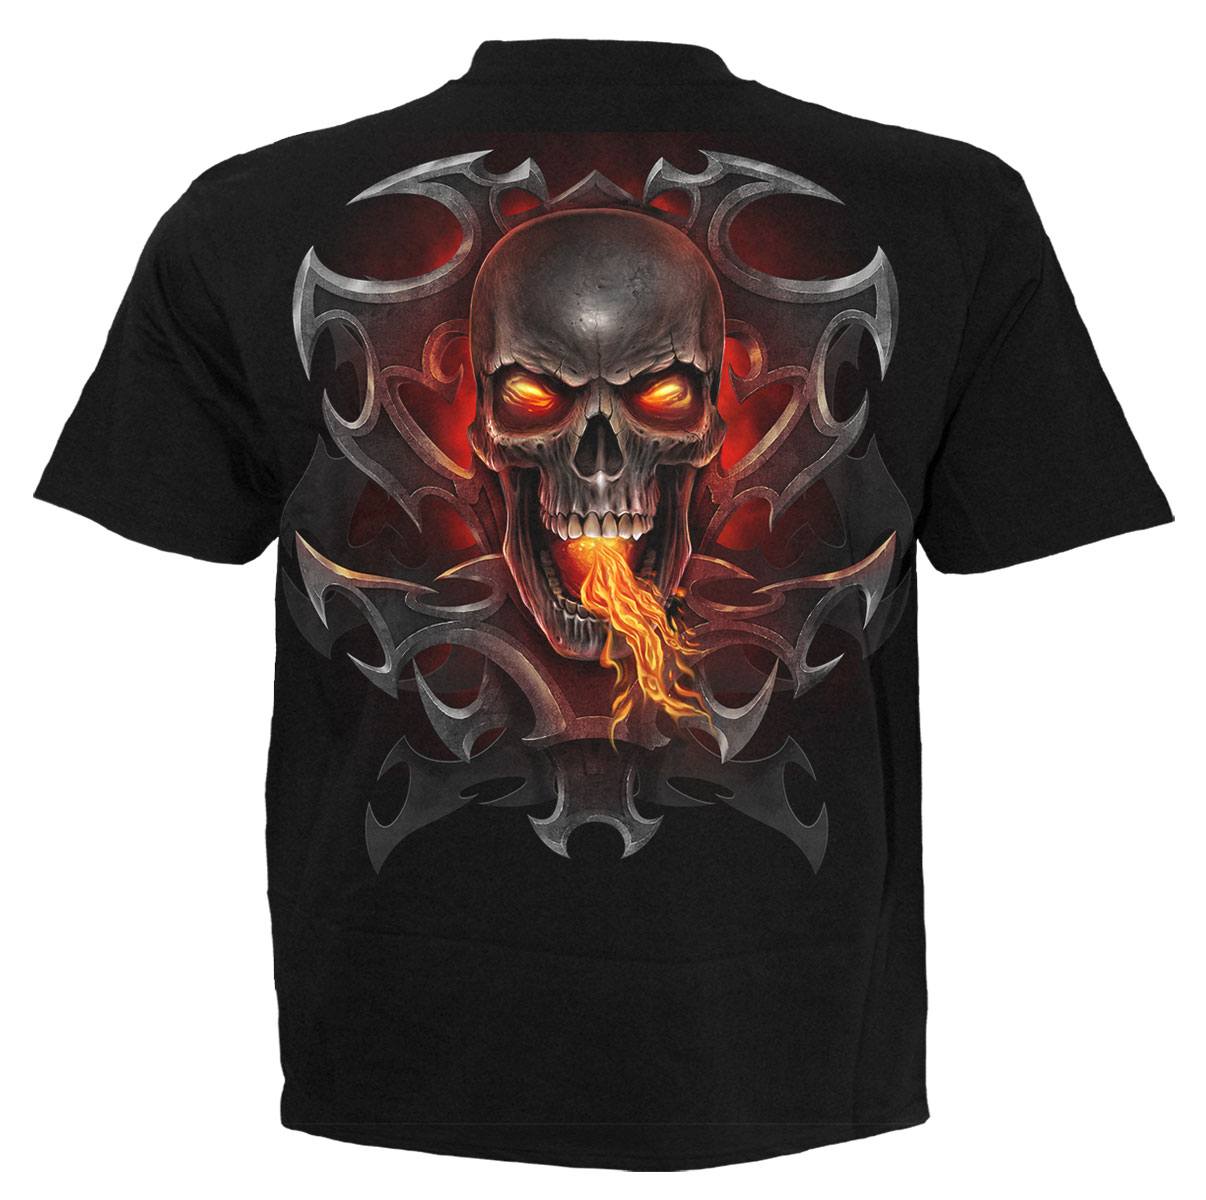 Spiral Fire Dragon, T-Shirt Black|Dragon|Flames|Tribal|Skulls | eBay